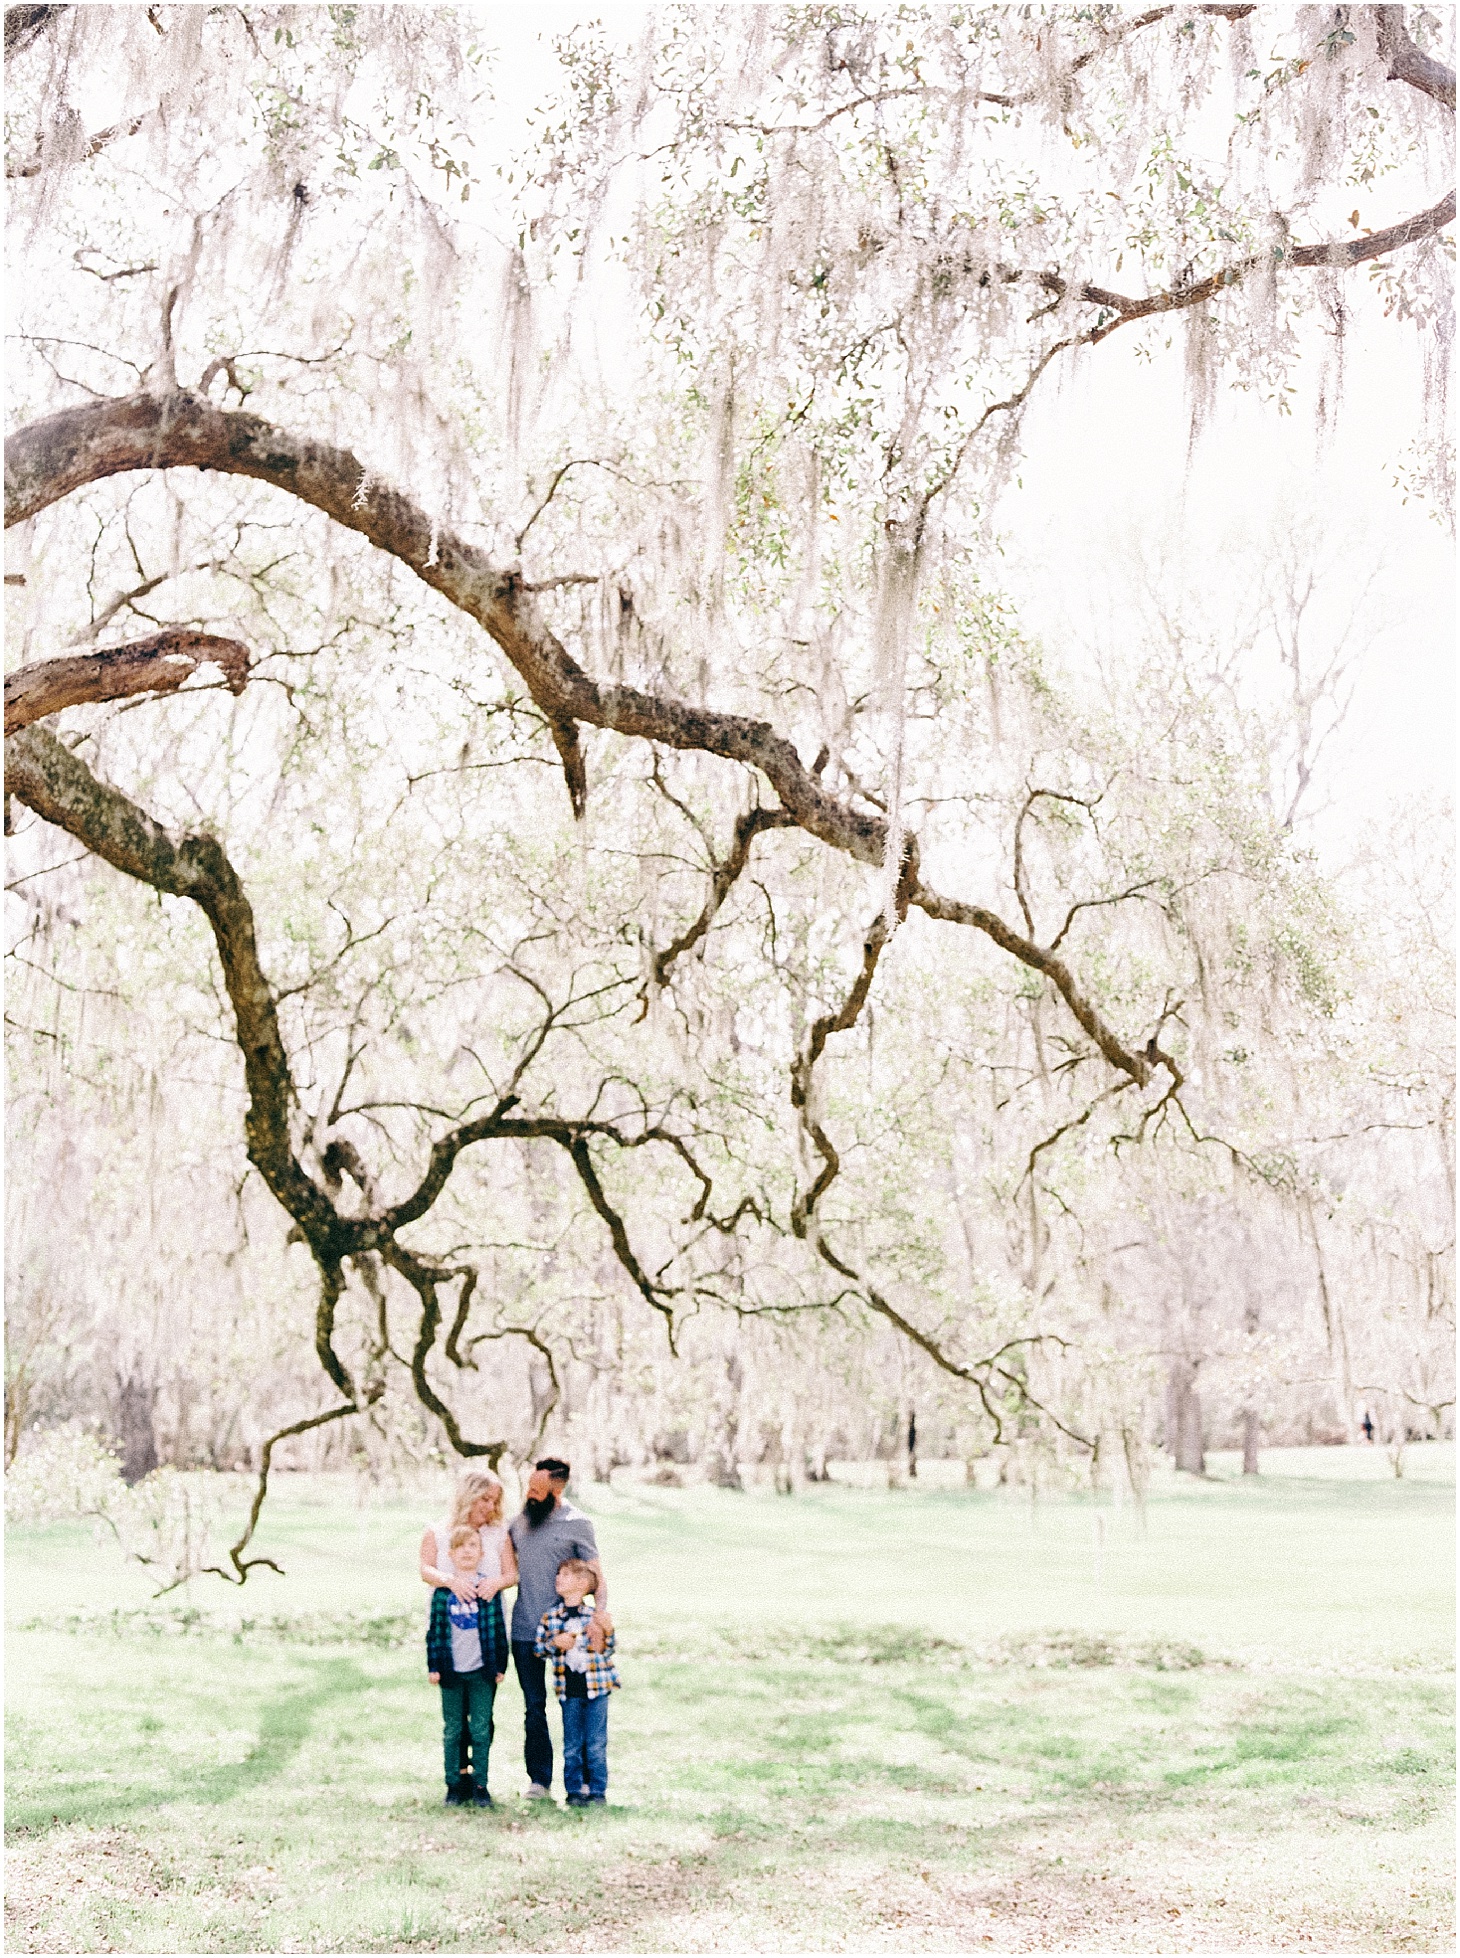 Charleston Family Session at Magnolia Plantation on Film | Nikki Santerre Photography | Fine Art Film Photographer